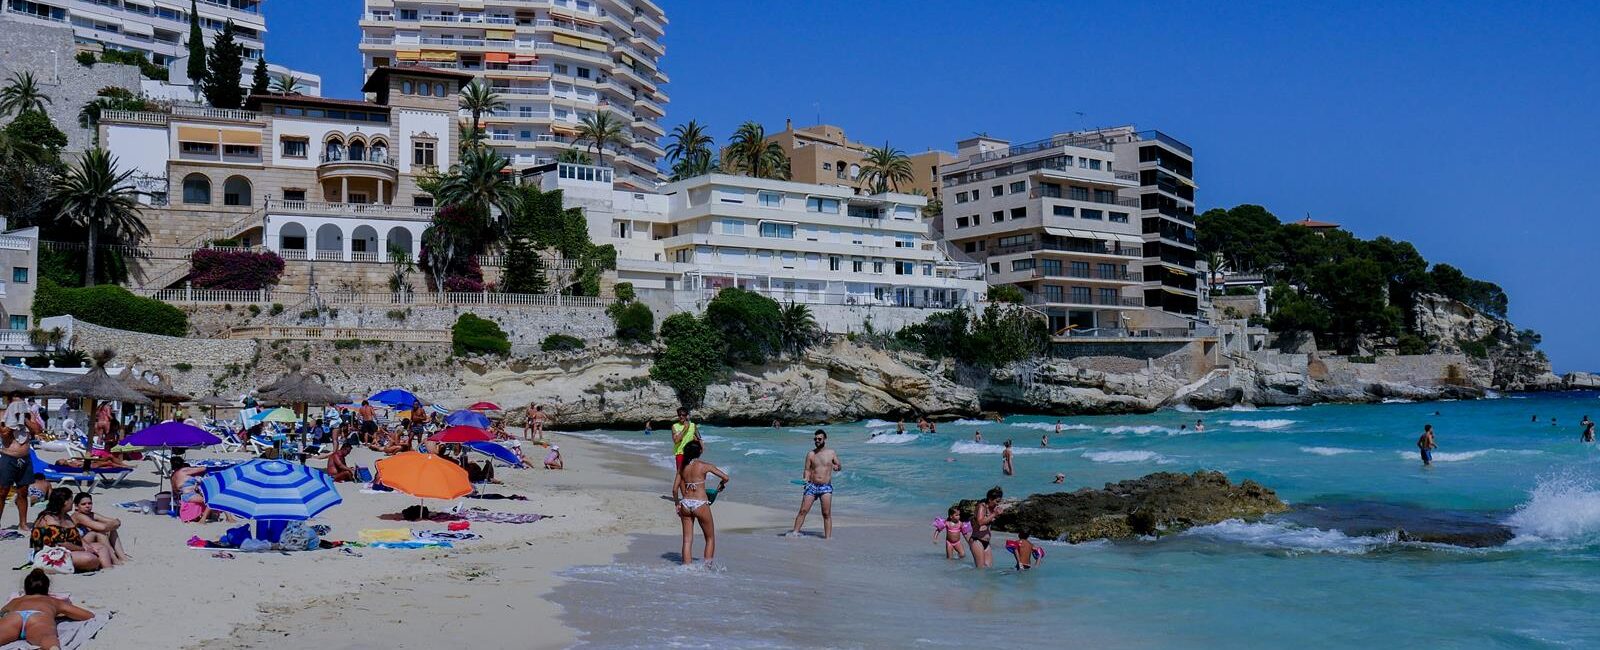 Cala Mayor – beautiful beach next to the big town in Majorca.